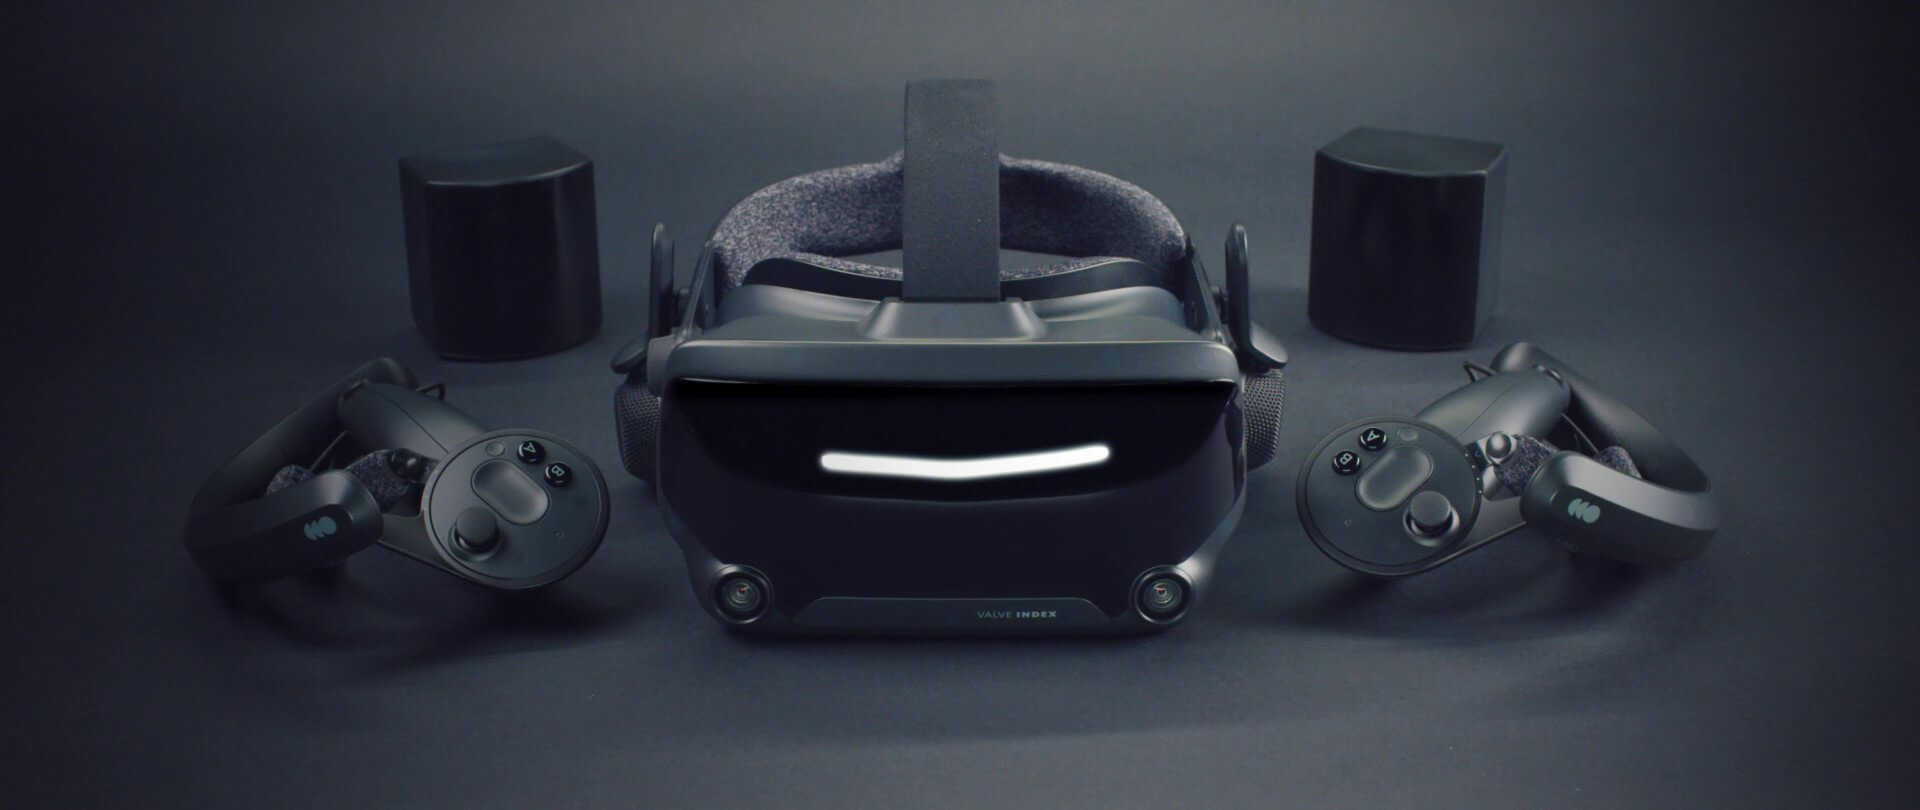 Valve Index－VR体験をアップグレード - Valve Corporation